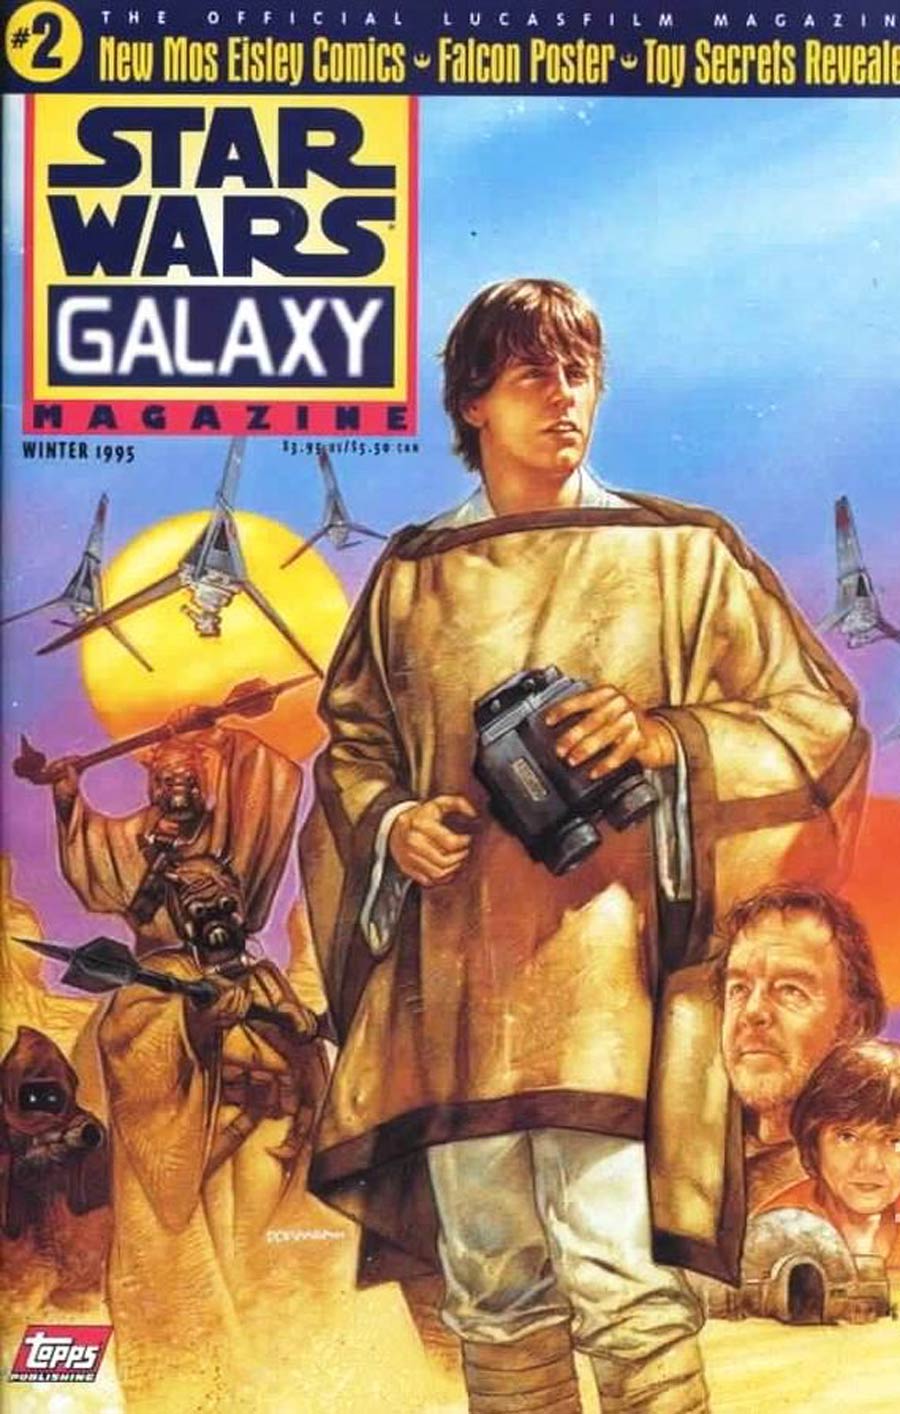 Star Wars Galaxy Magazine #2 Cover B No Polybag